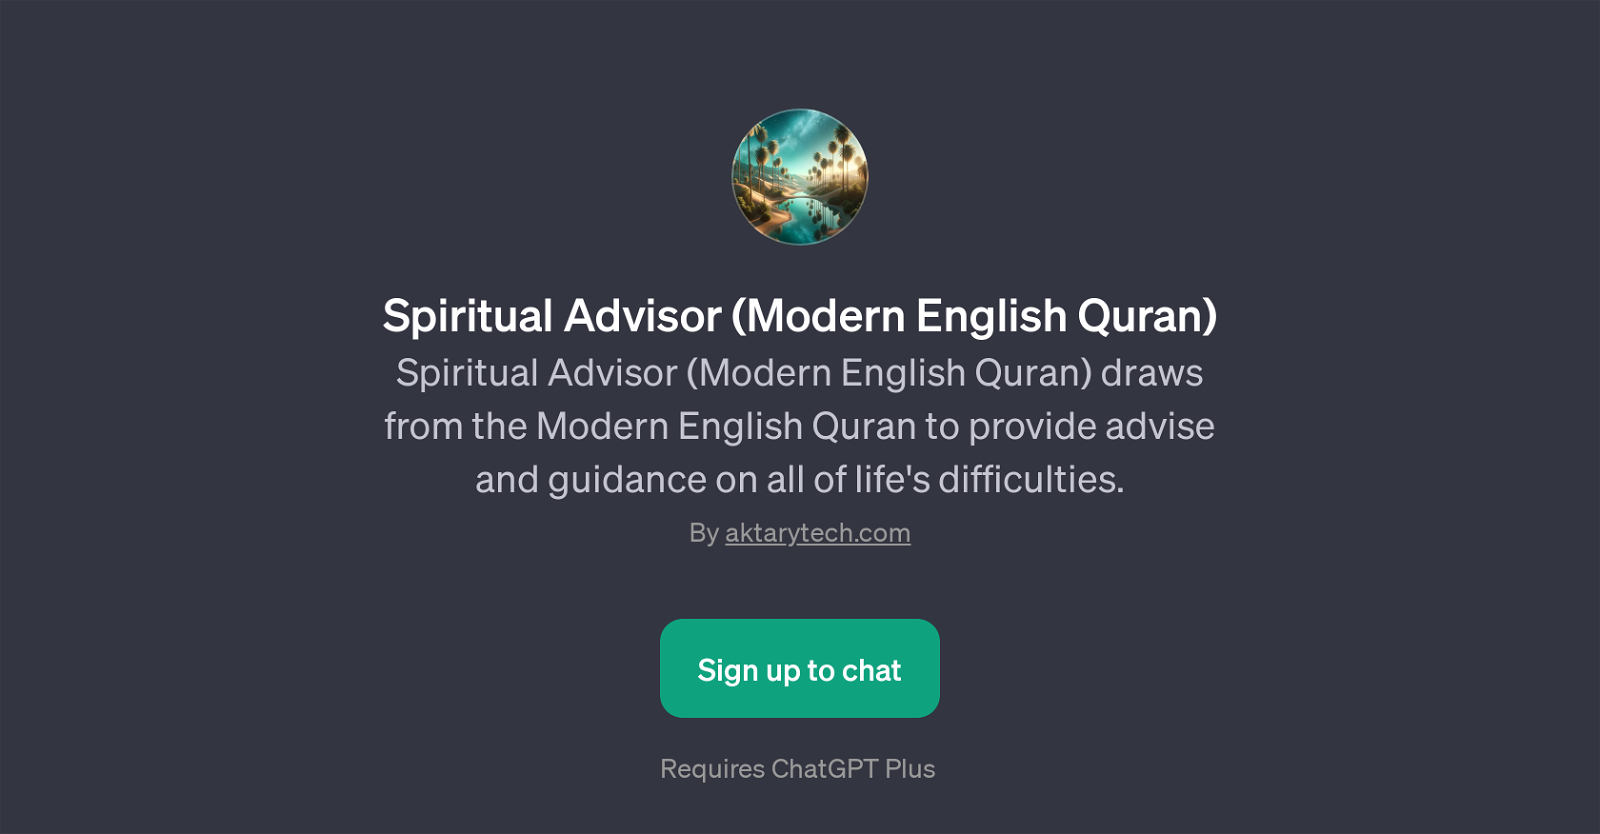 Spiritual Advisor (Modern English Quran) website